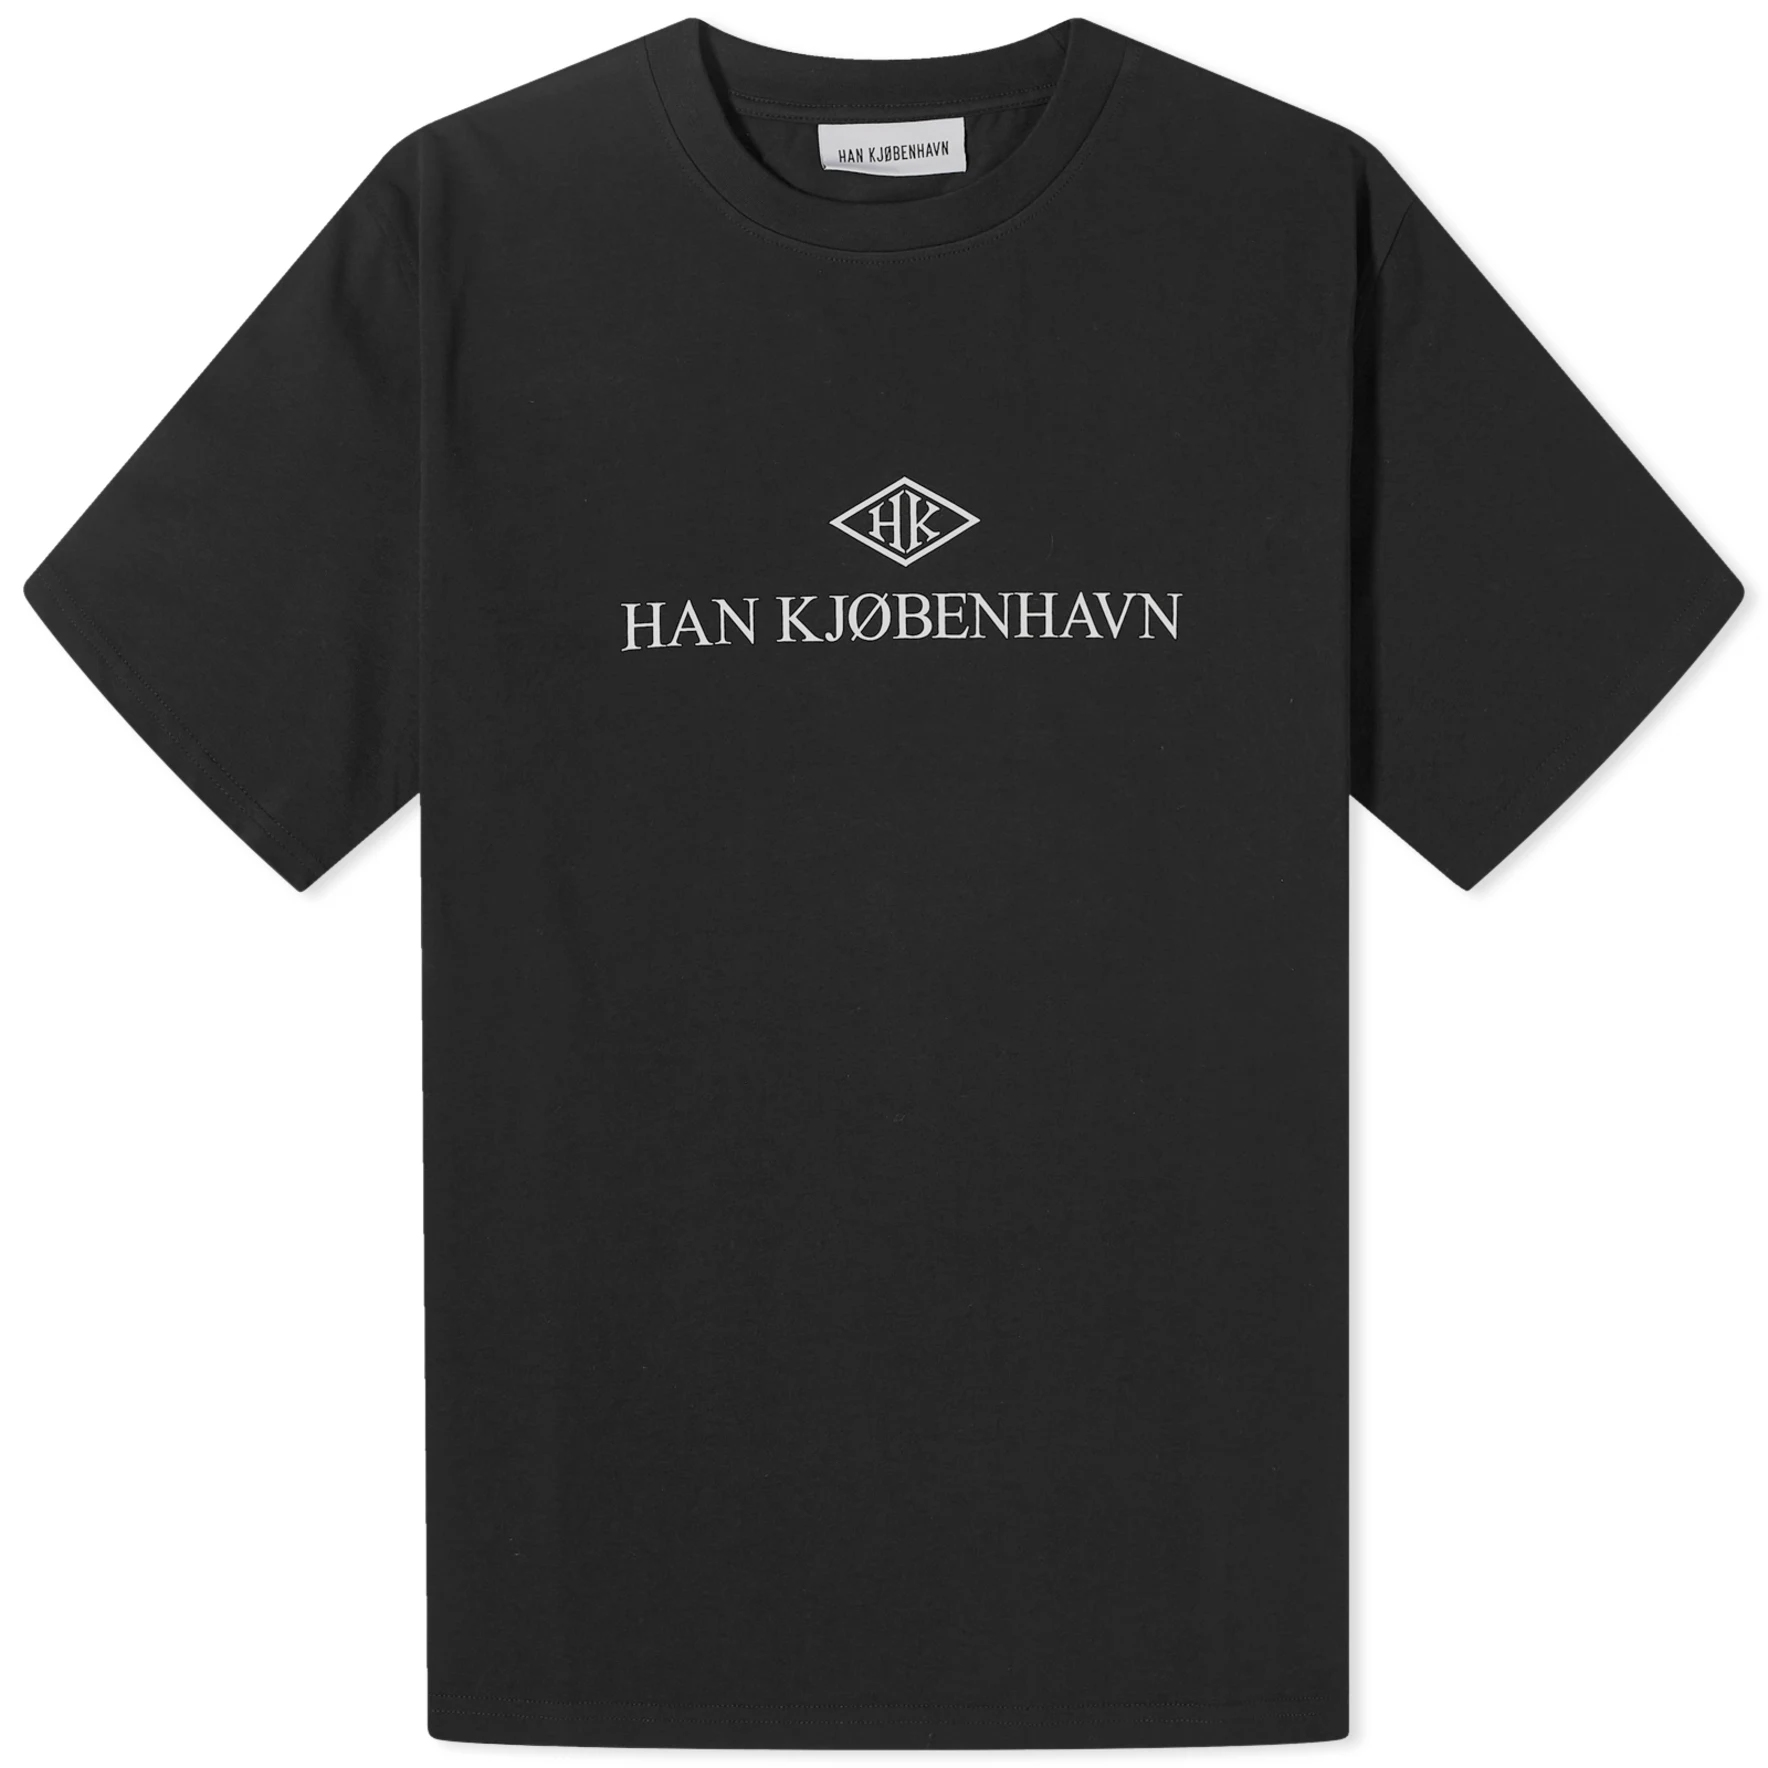 футболка han kjobenhavn размер xs черный Футболка Han Kjobenhavn Hk Logo Boxy, черный